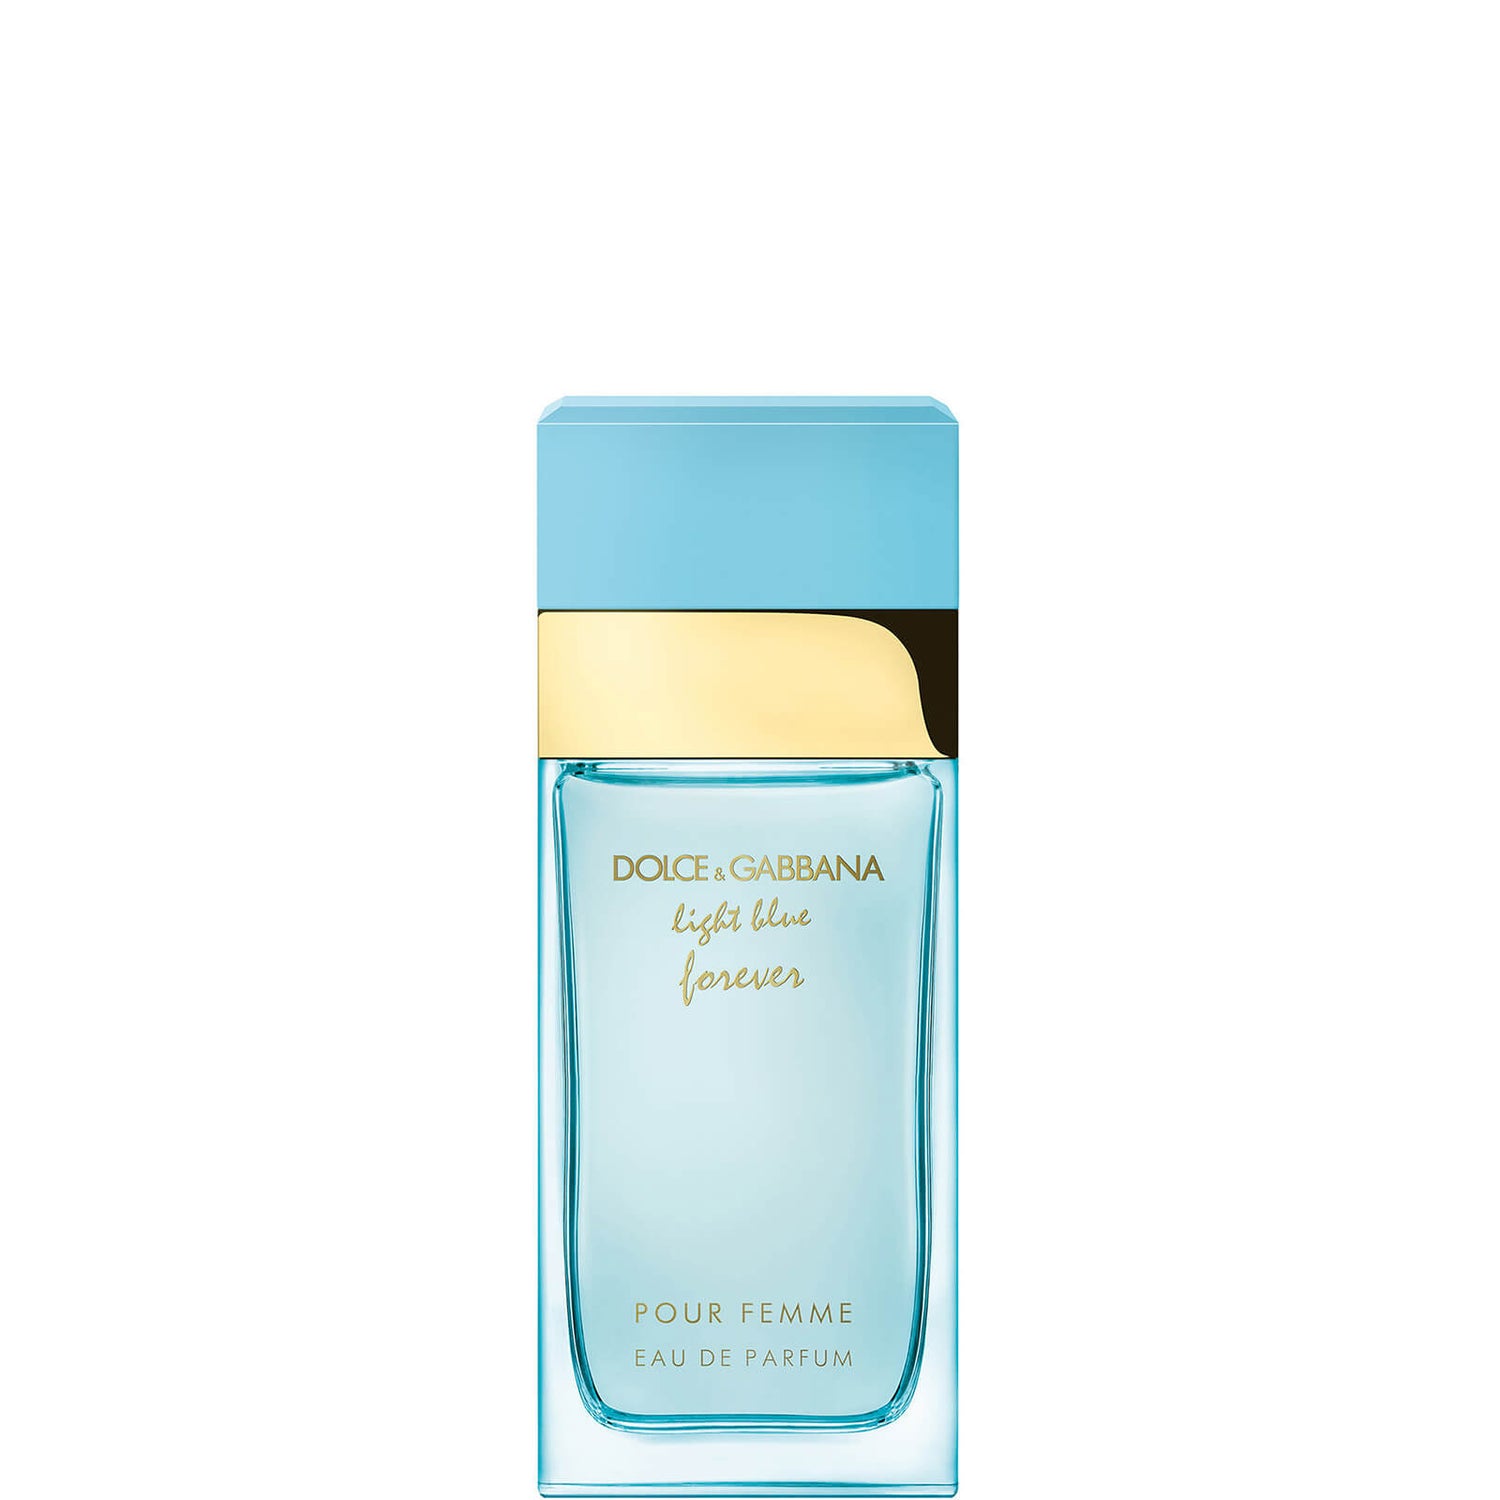 Dolce&Gabbana Light Blue Forever Eau de Parfum - 25 ml